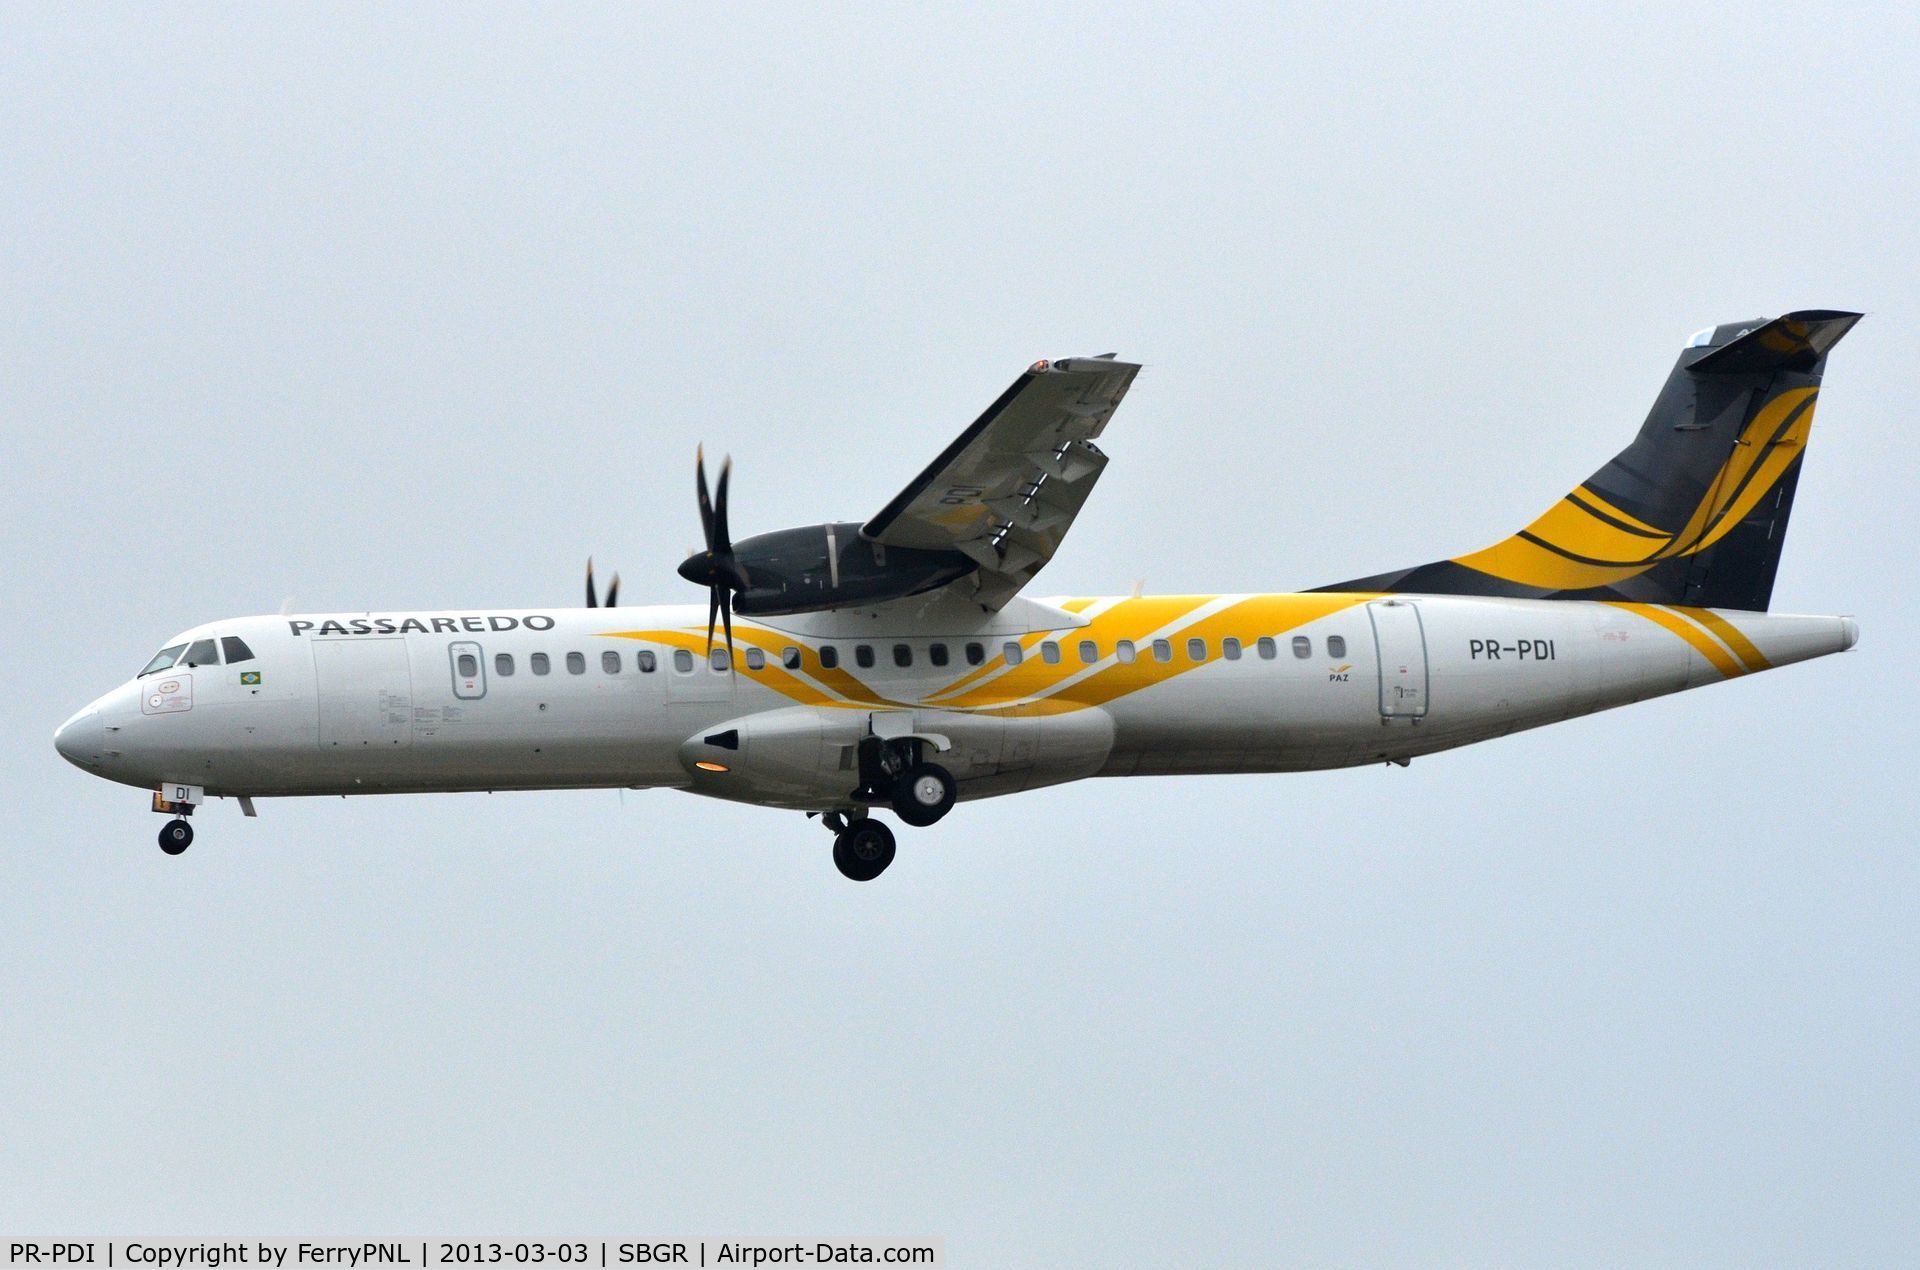 PR-PDI, 2012 ATR 72-600 C/N 1059, Passaredo ATR72 landing